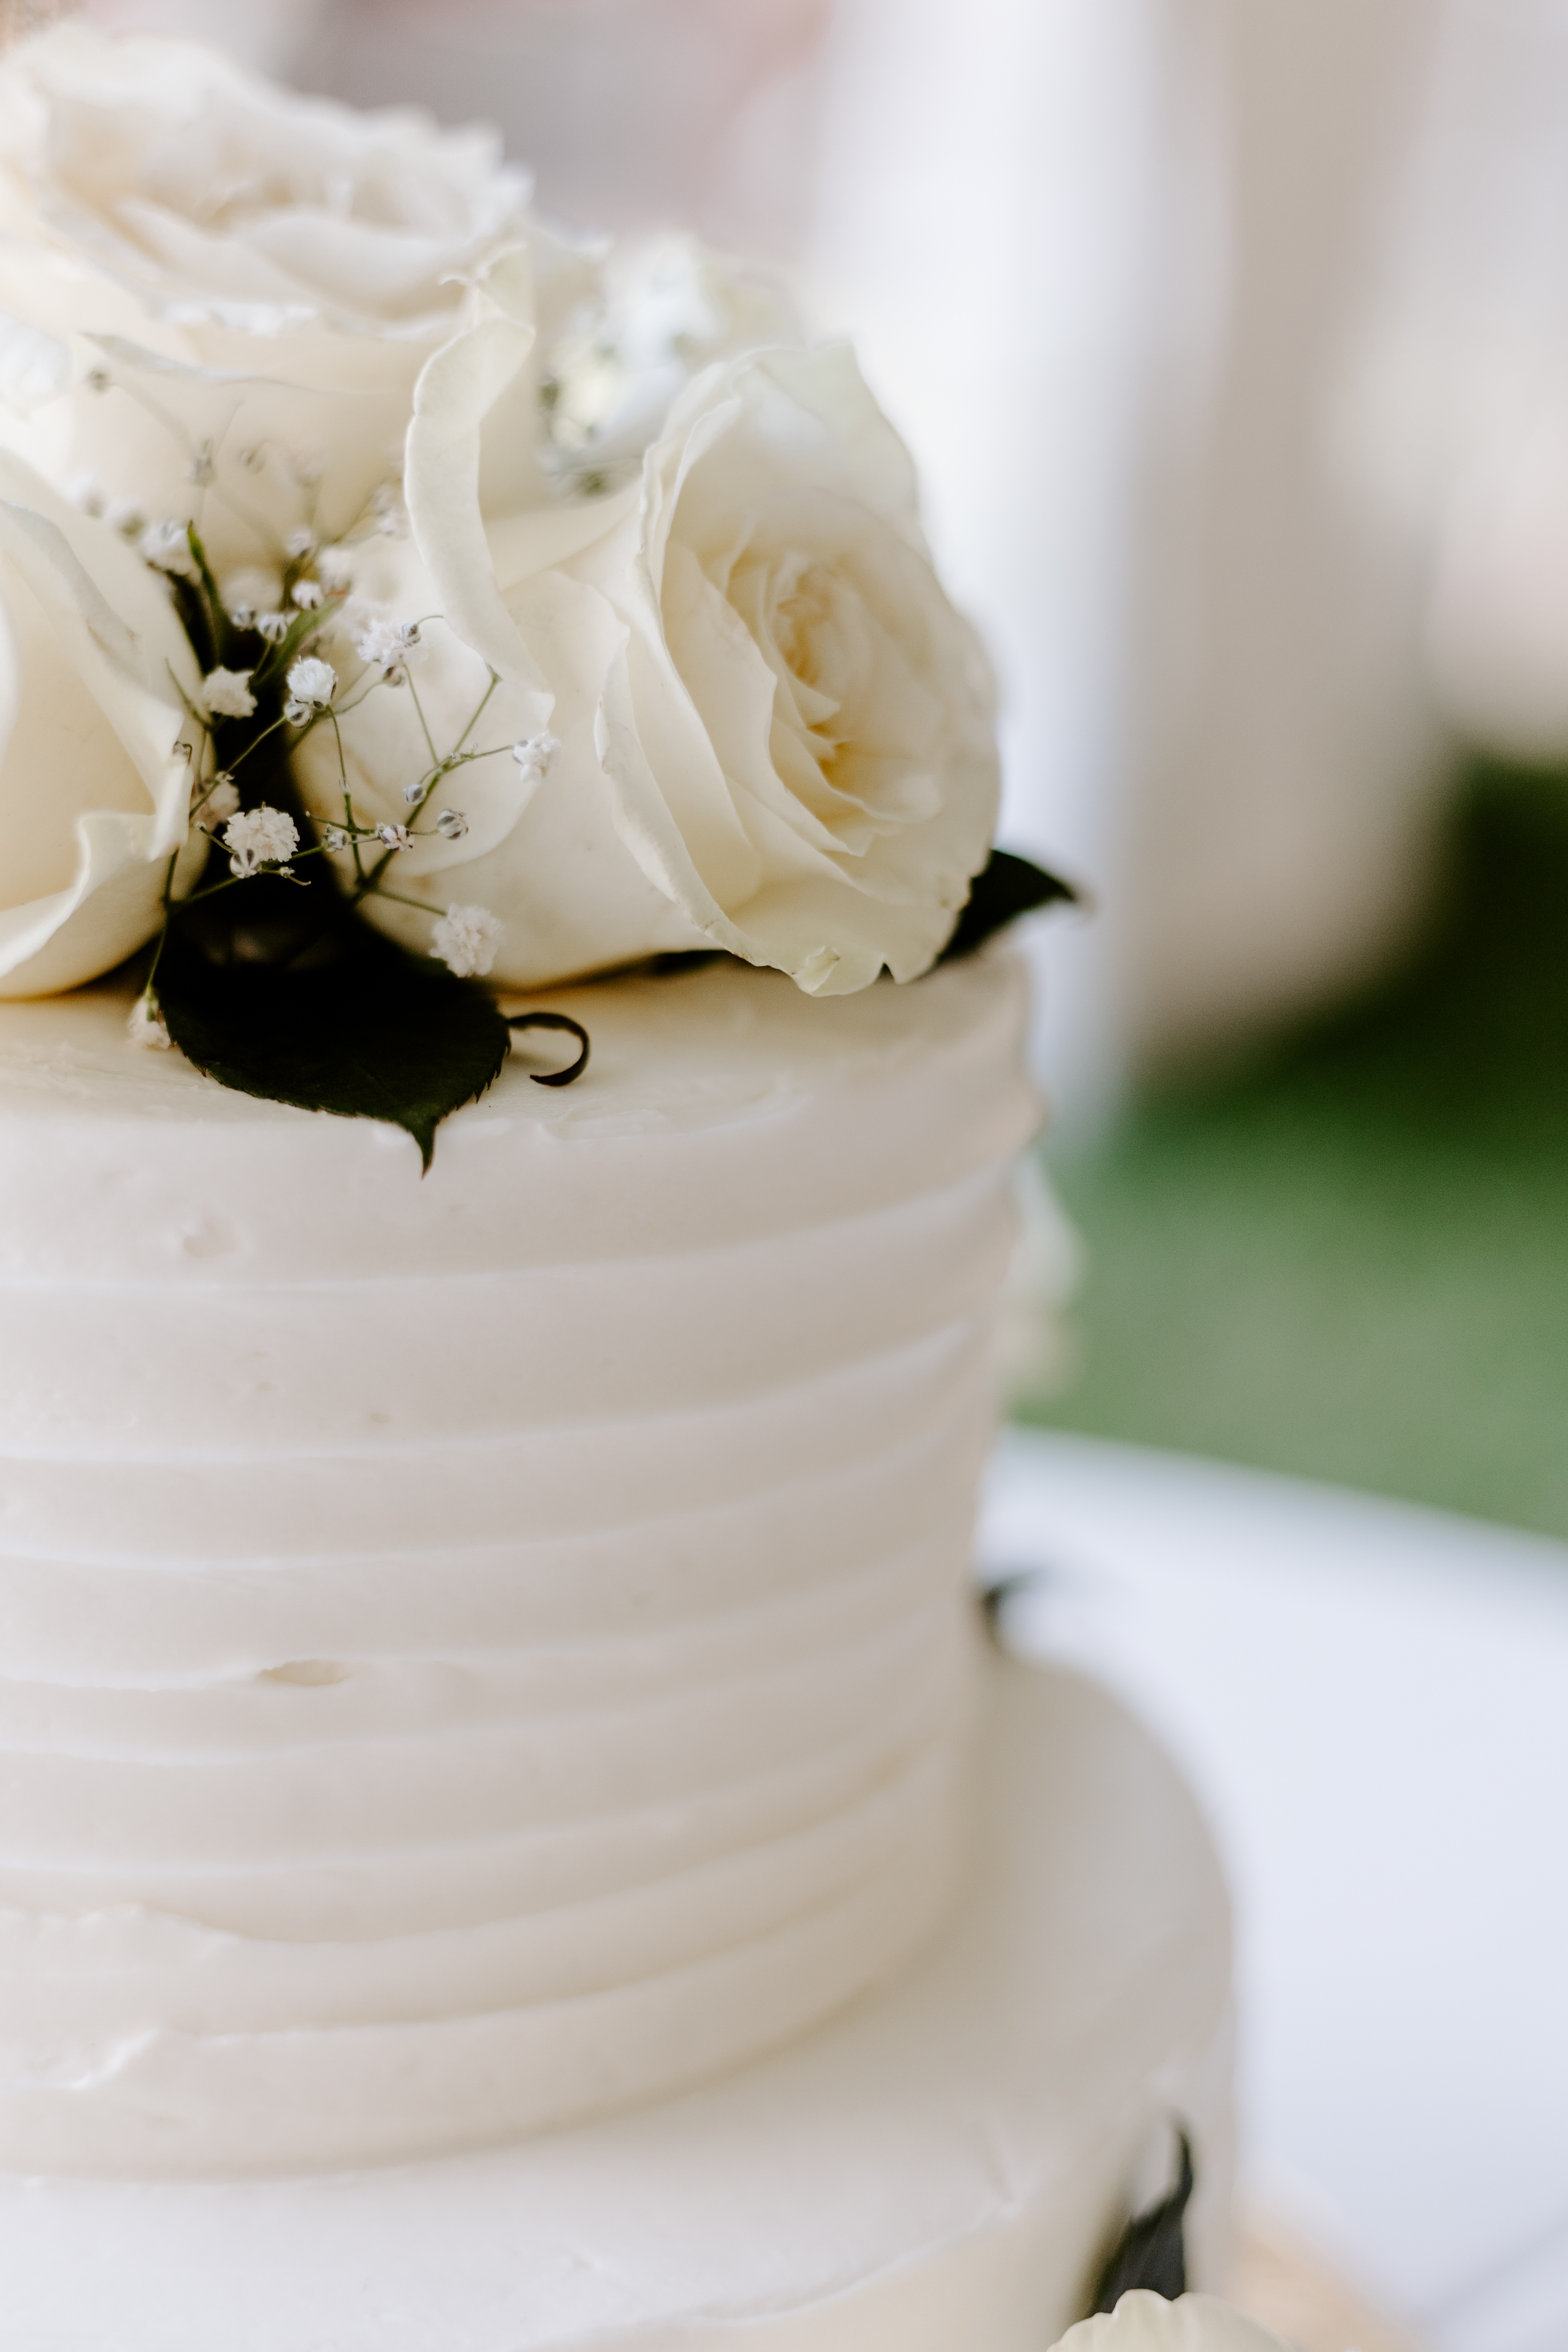 Detail photograph of fresh florals on wedding cake for spring garden wedding in Delaware